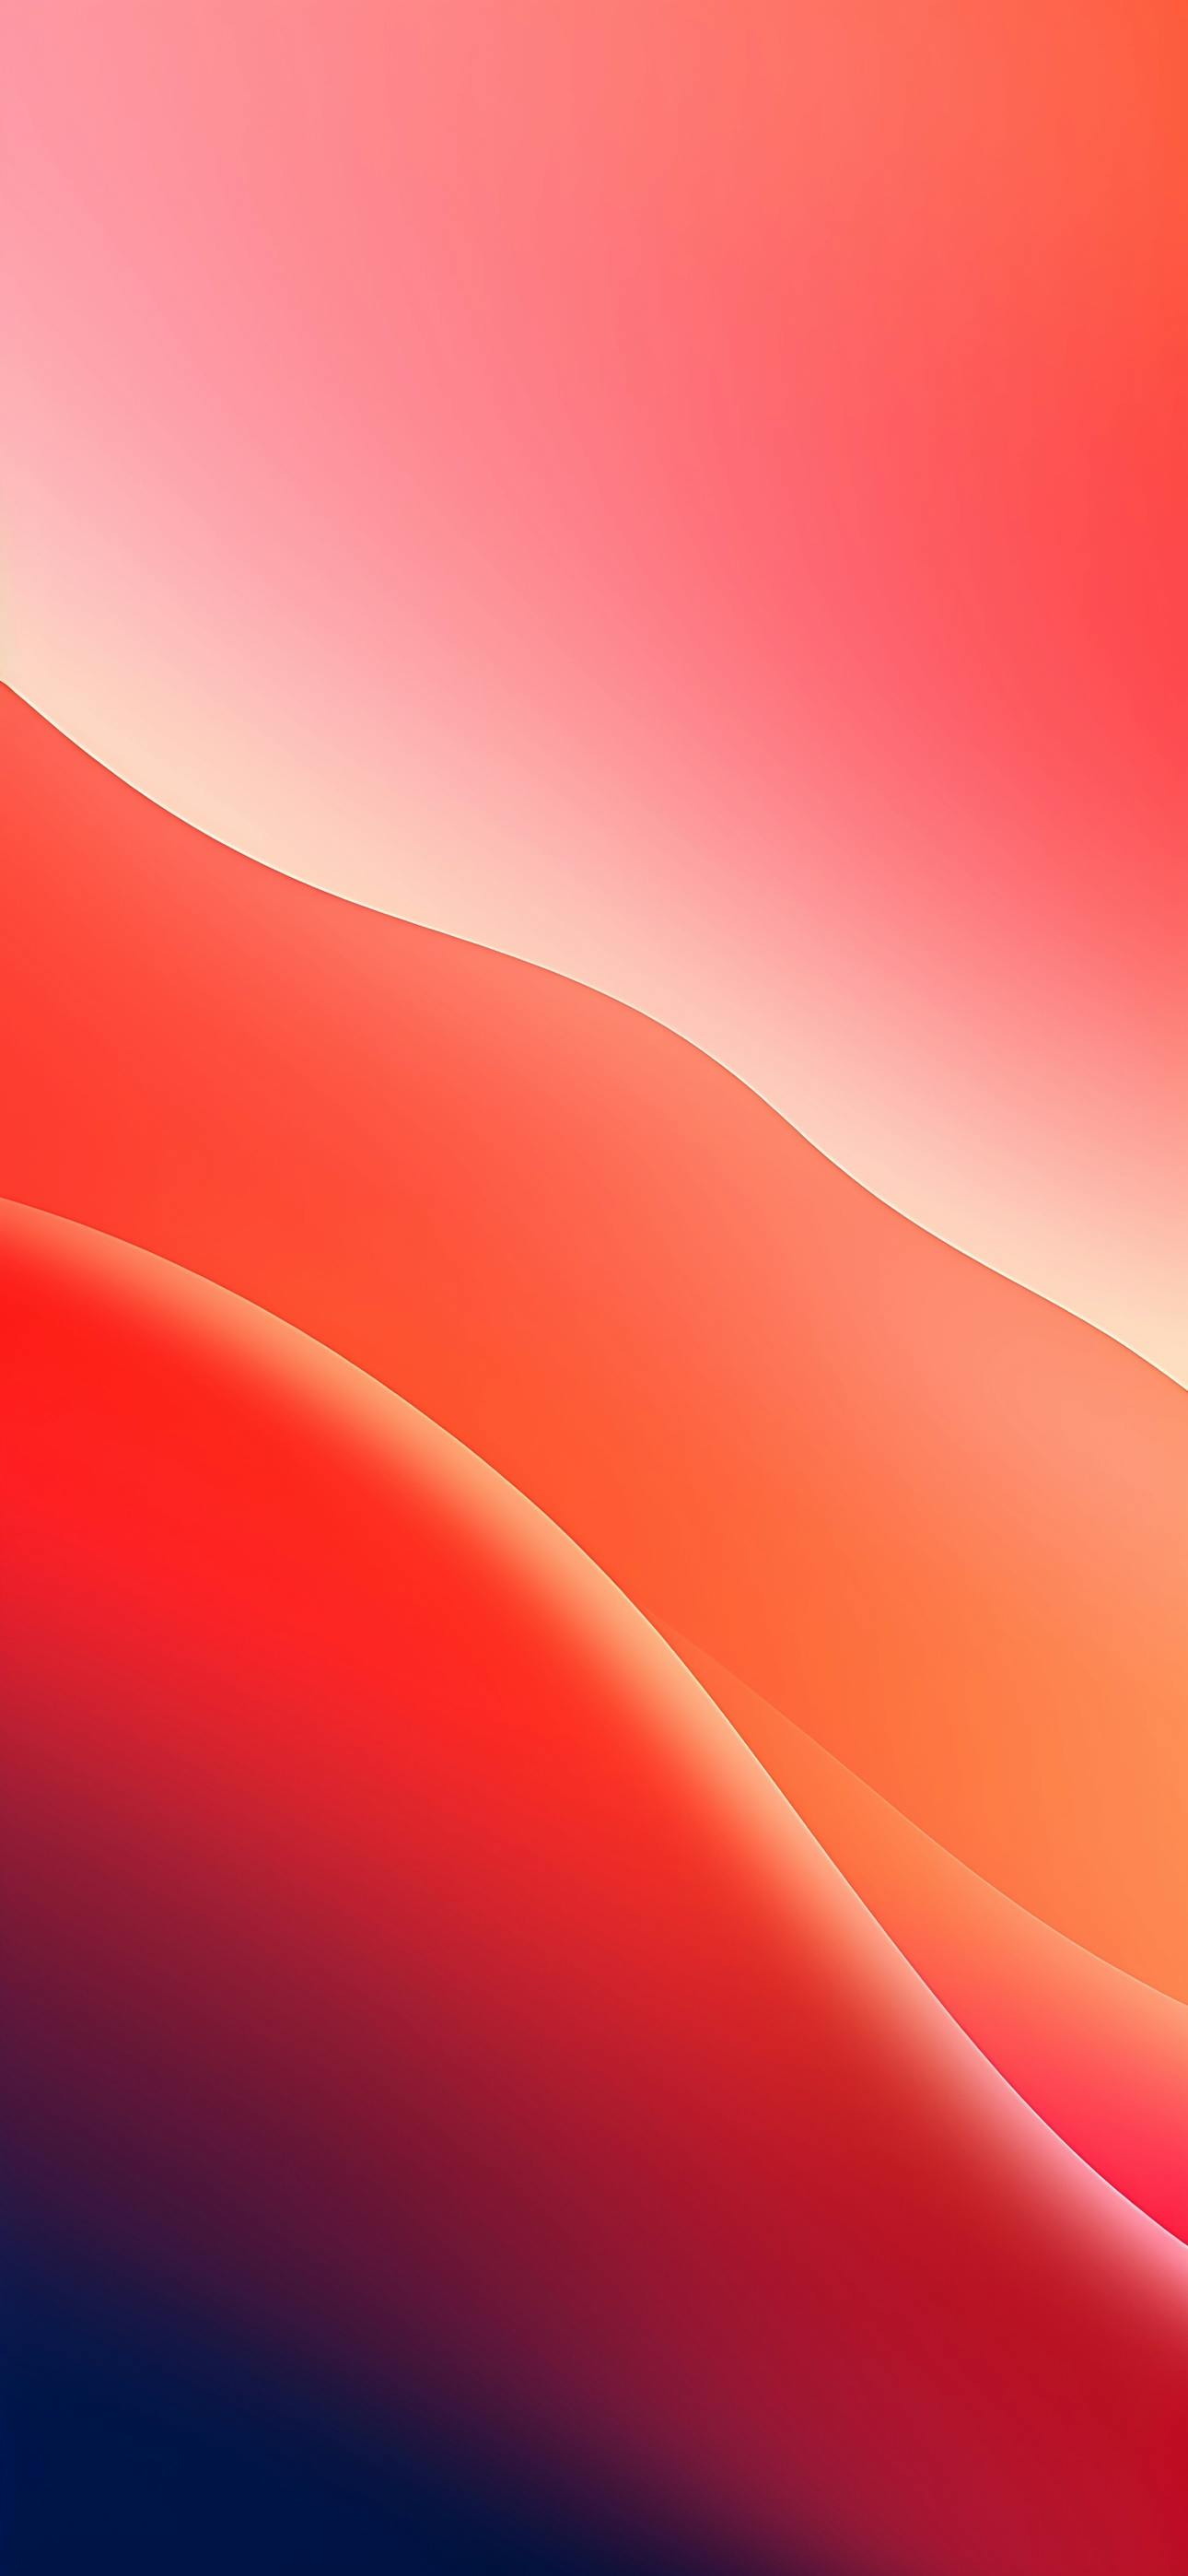 Berry Delight gradient wallpaper for iPhone